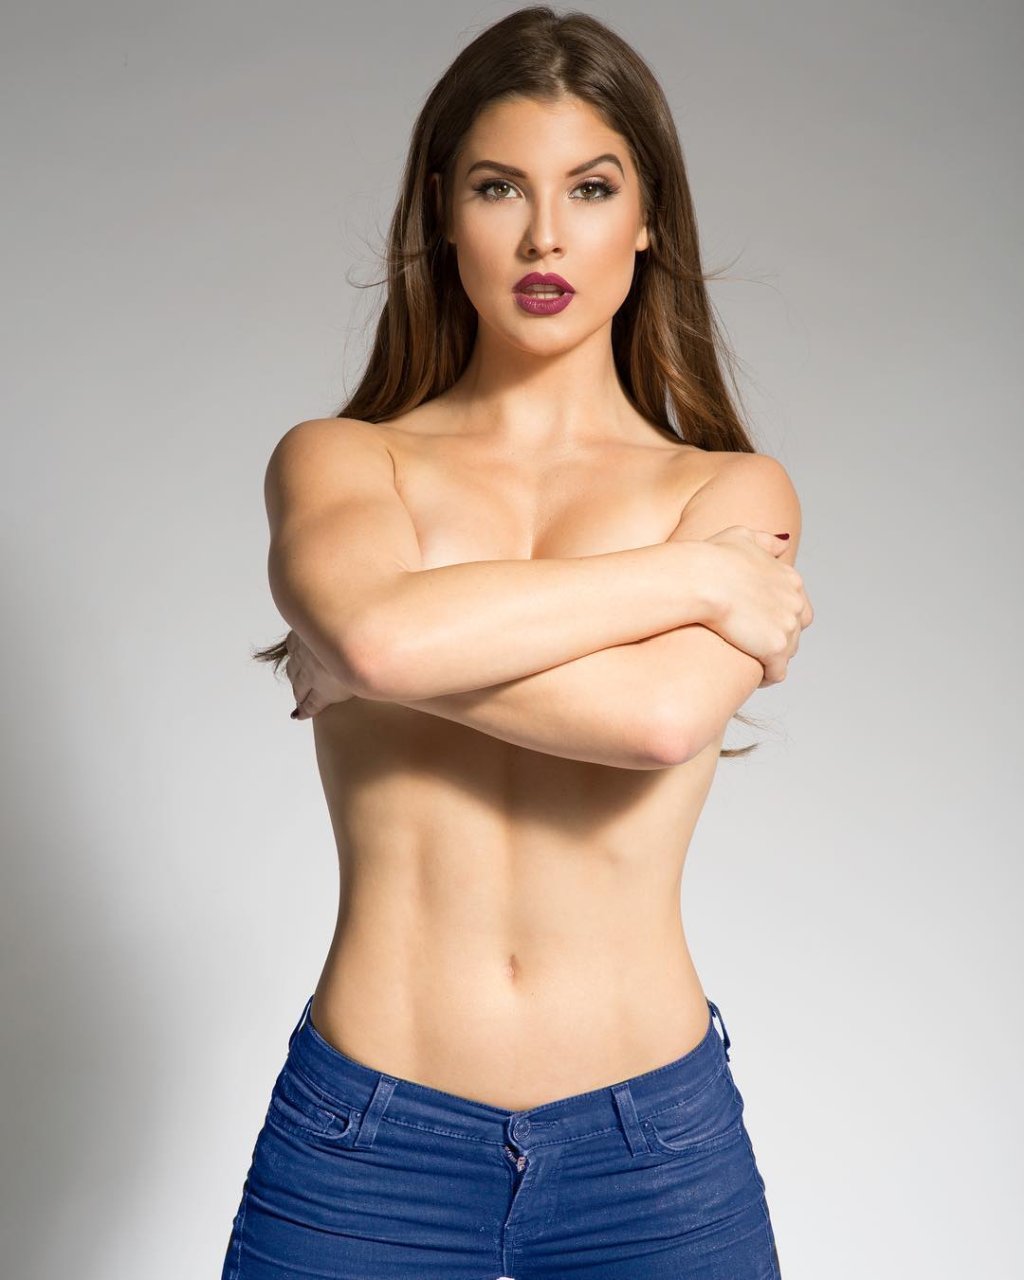 Top Amanda Cerny Topless